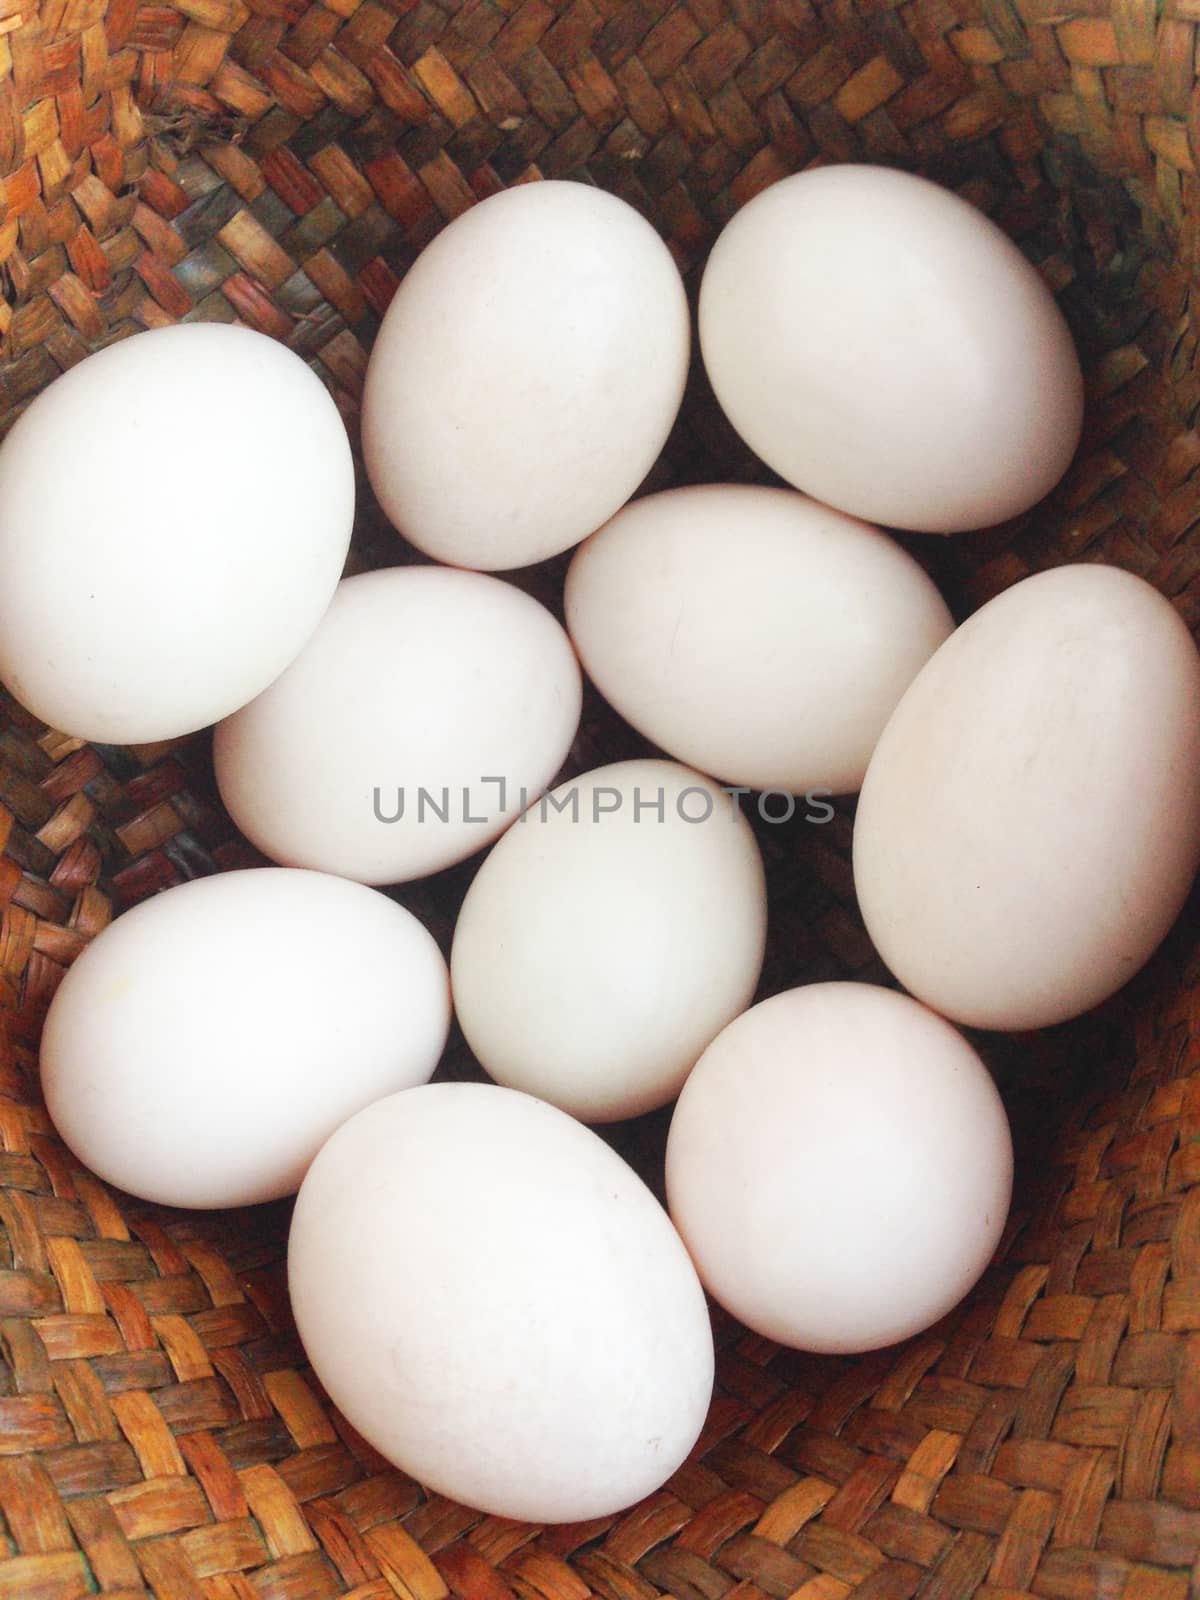 duck eggs on basket by Bowonpat